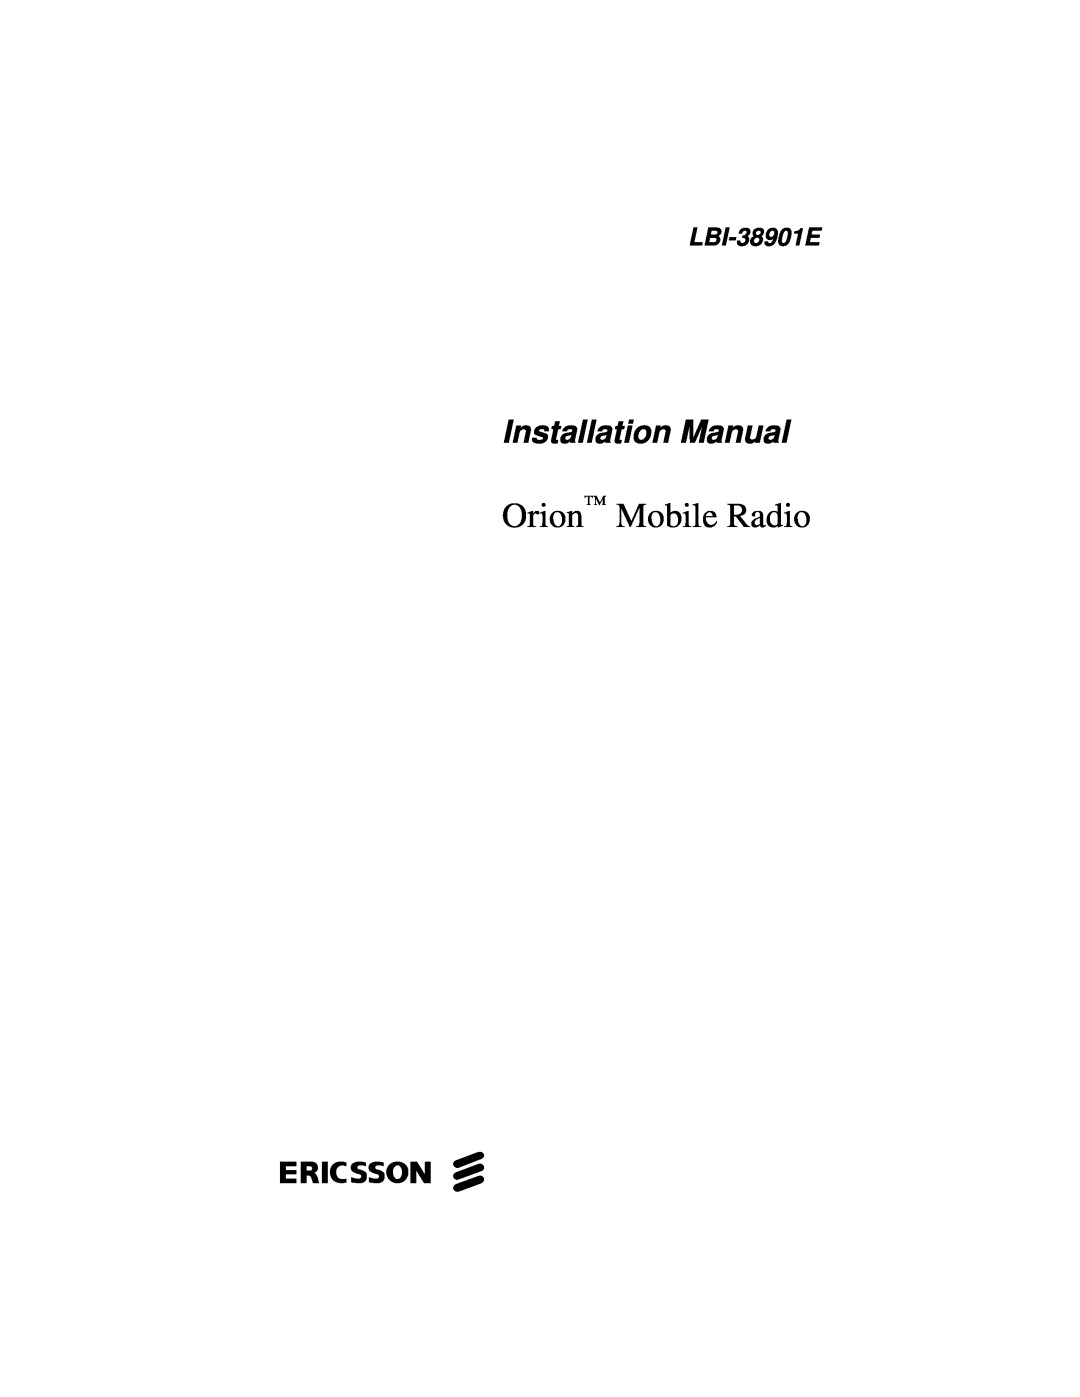 Ericsson installation manual ericssonz, Orion Mobile Radio, Installation Manual, LBI-38901E 